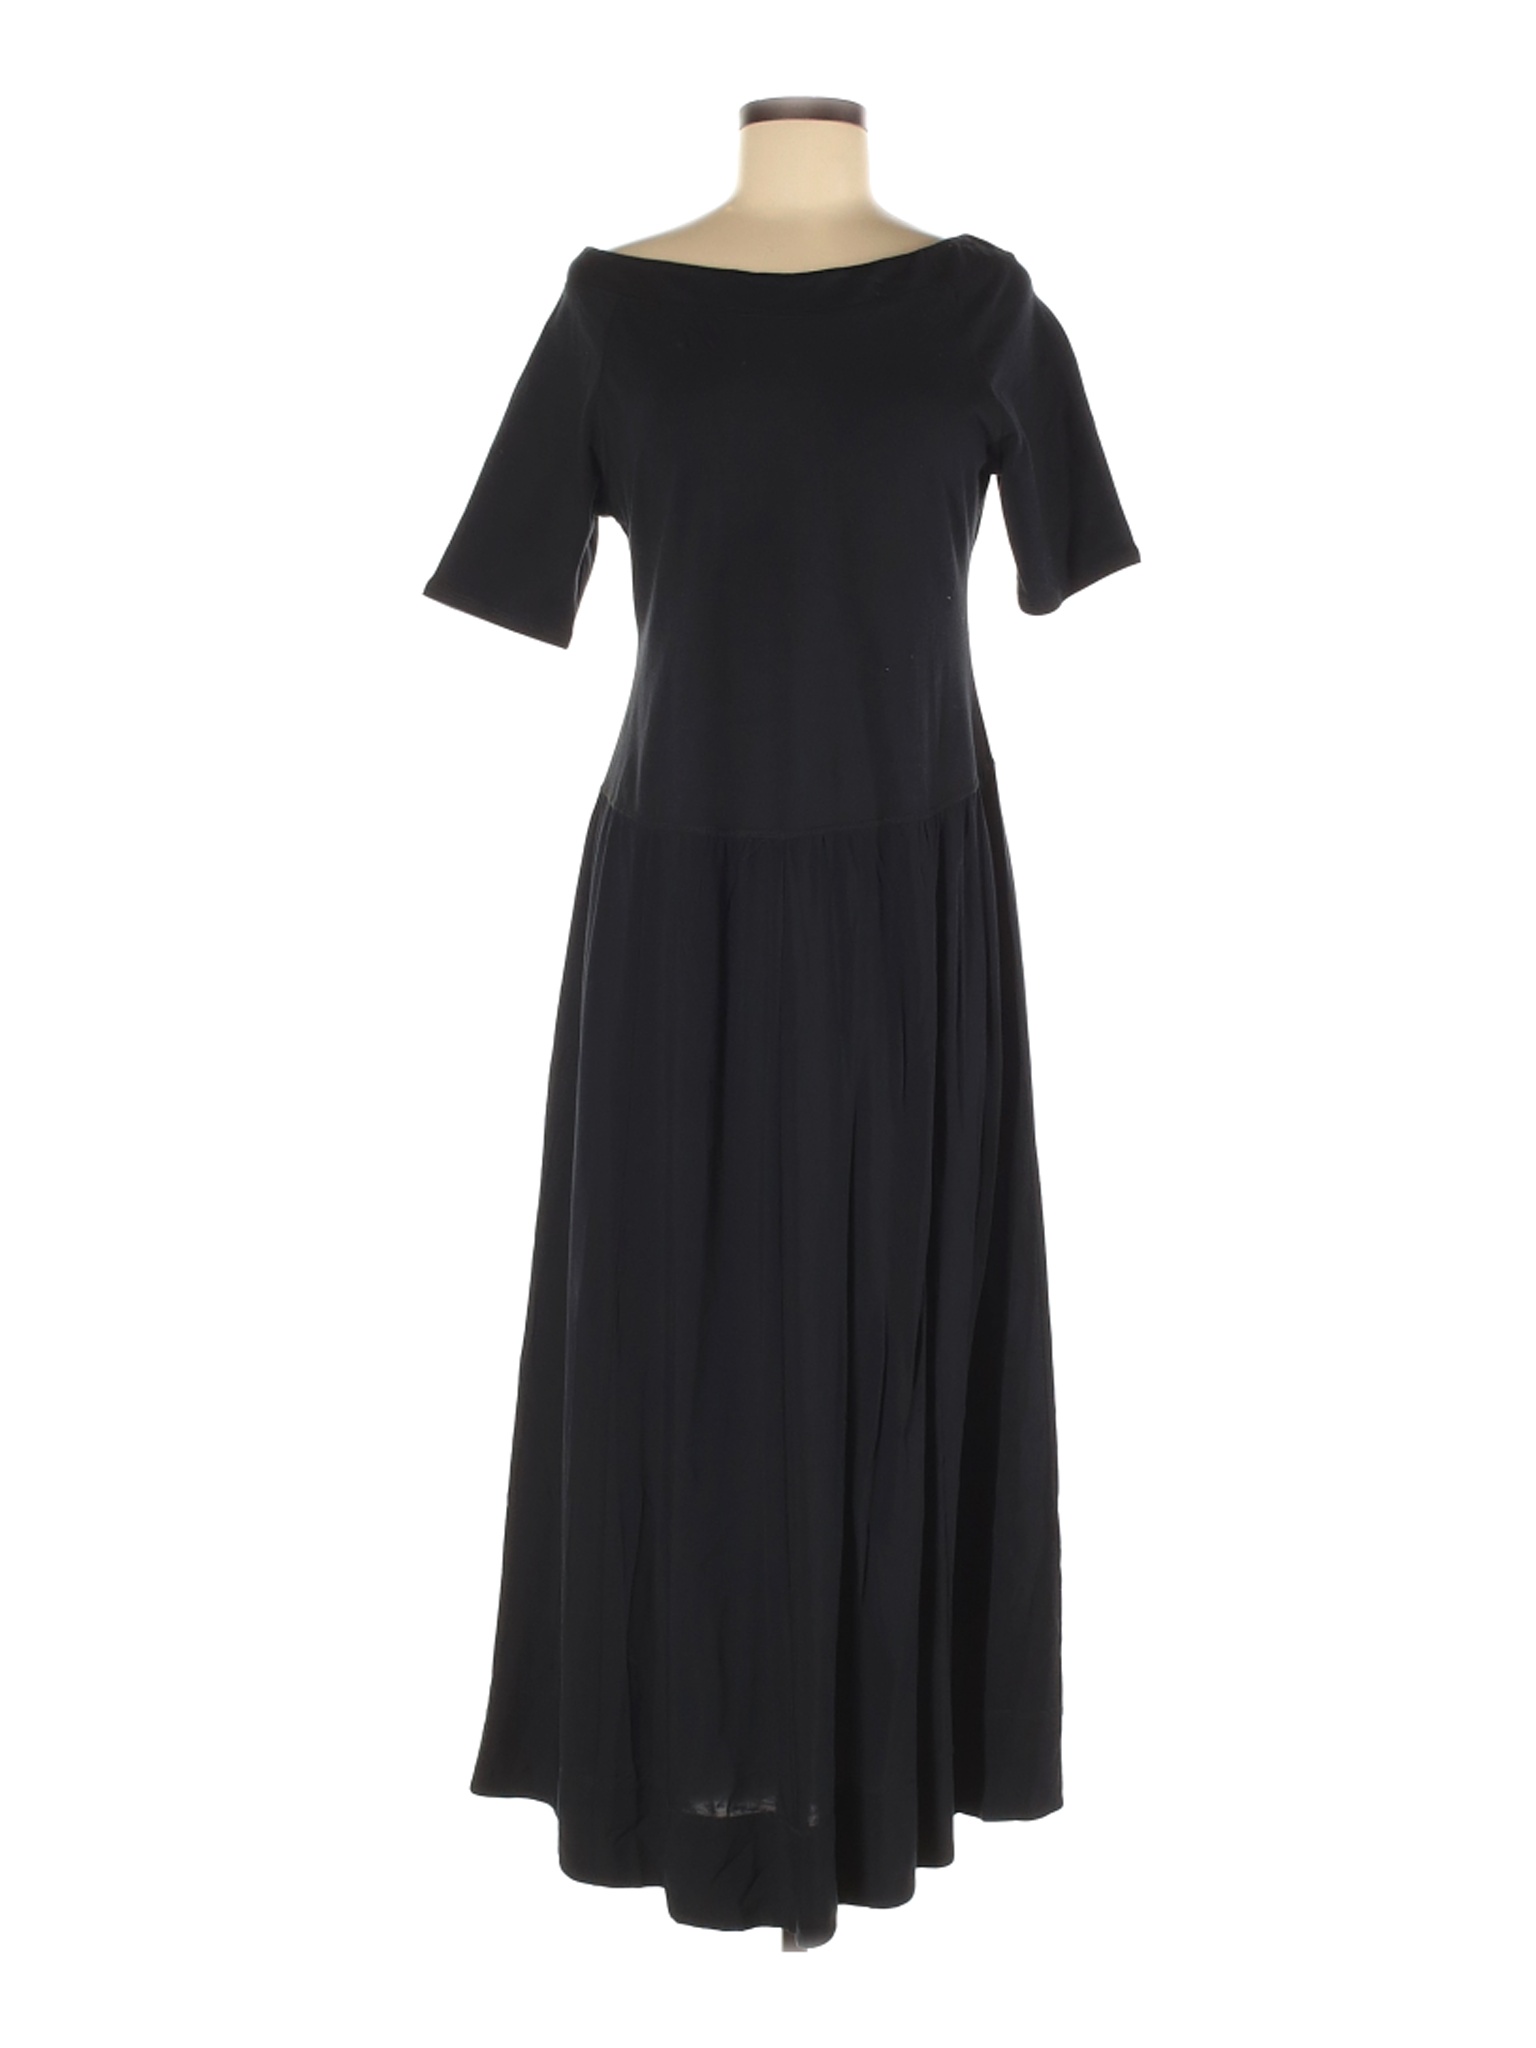 Soft Surroundings Women Black Casual Dress M Petites | eBay